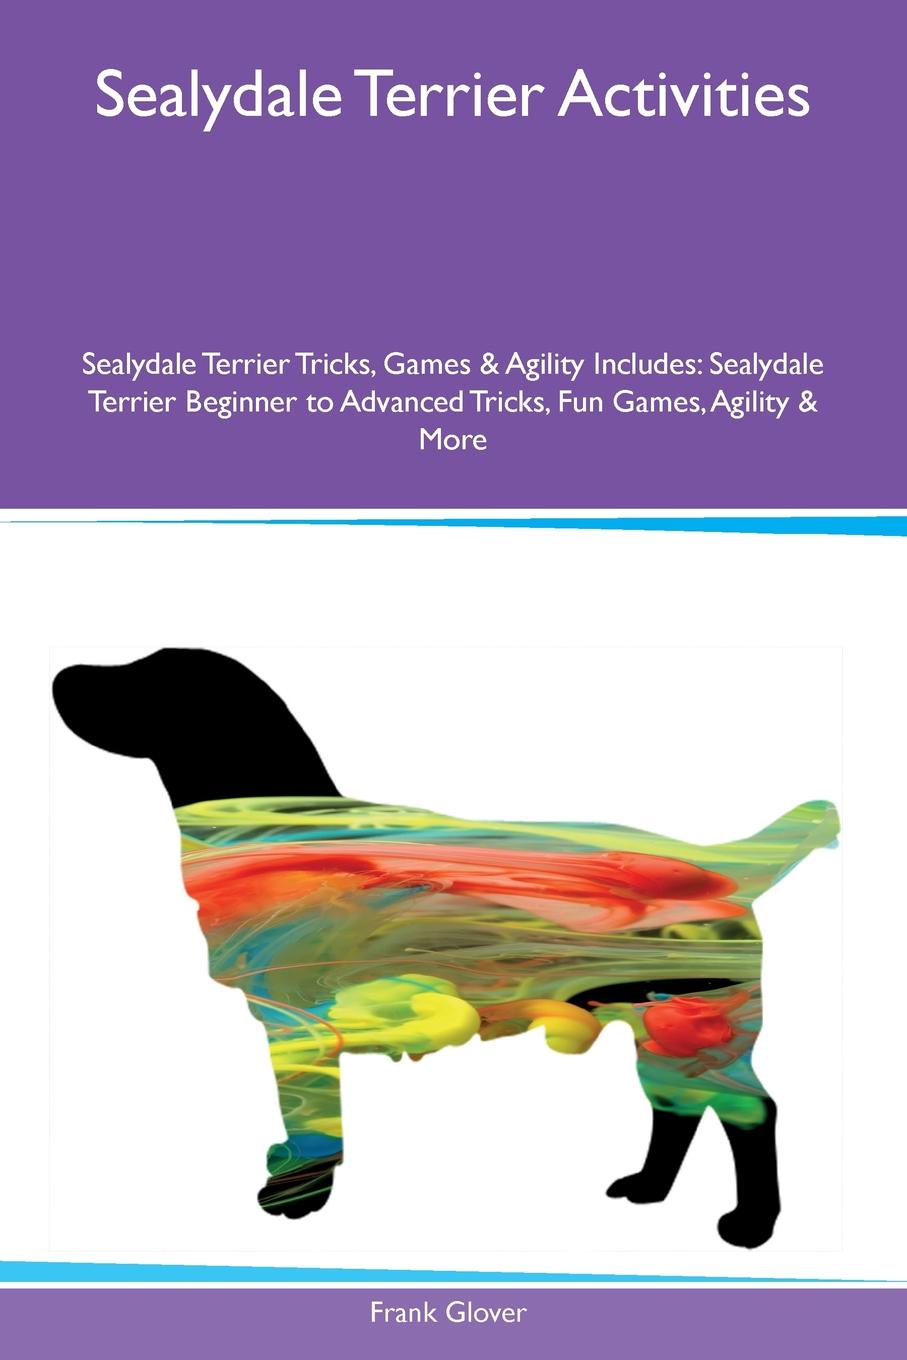 Sealydale Terrier Activities Sealydale Terrier Tricks, Games & Agility Includes. Sealydale Terrier Beginner to Advanced Tricks, Fun Games, Agility & More